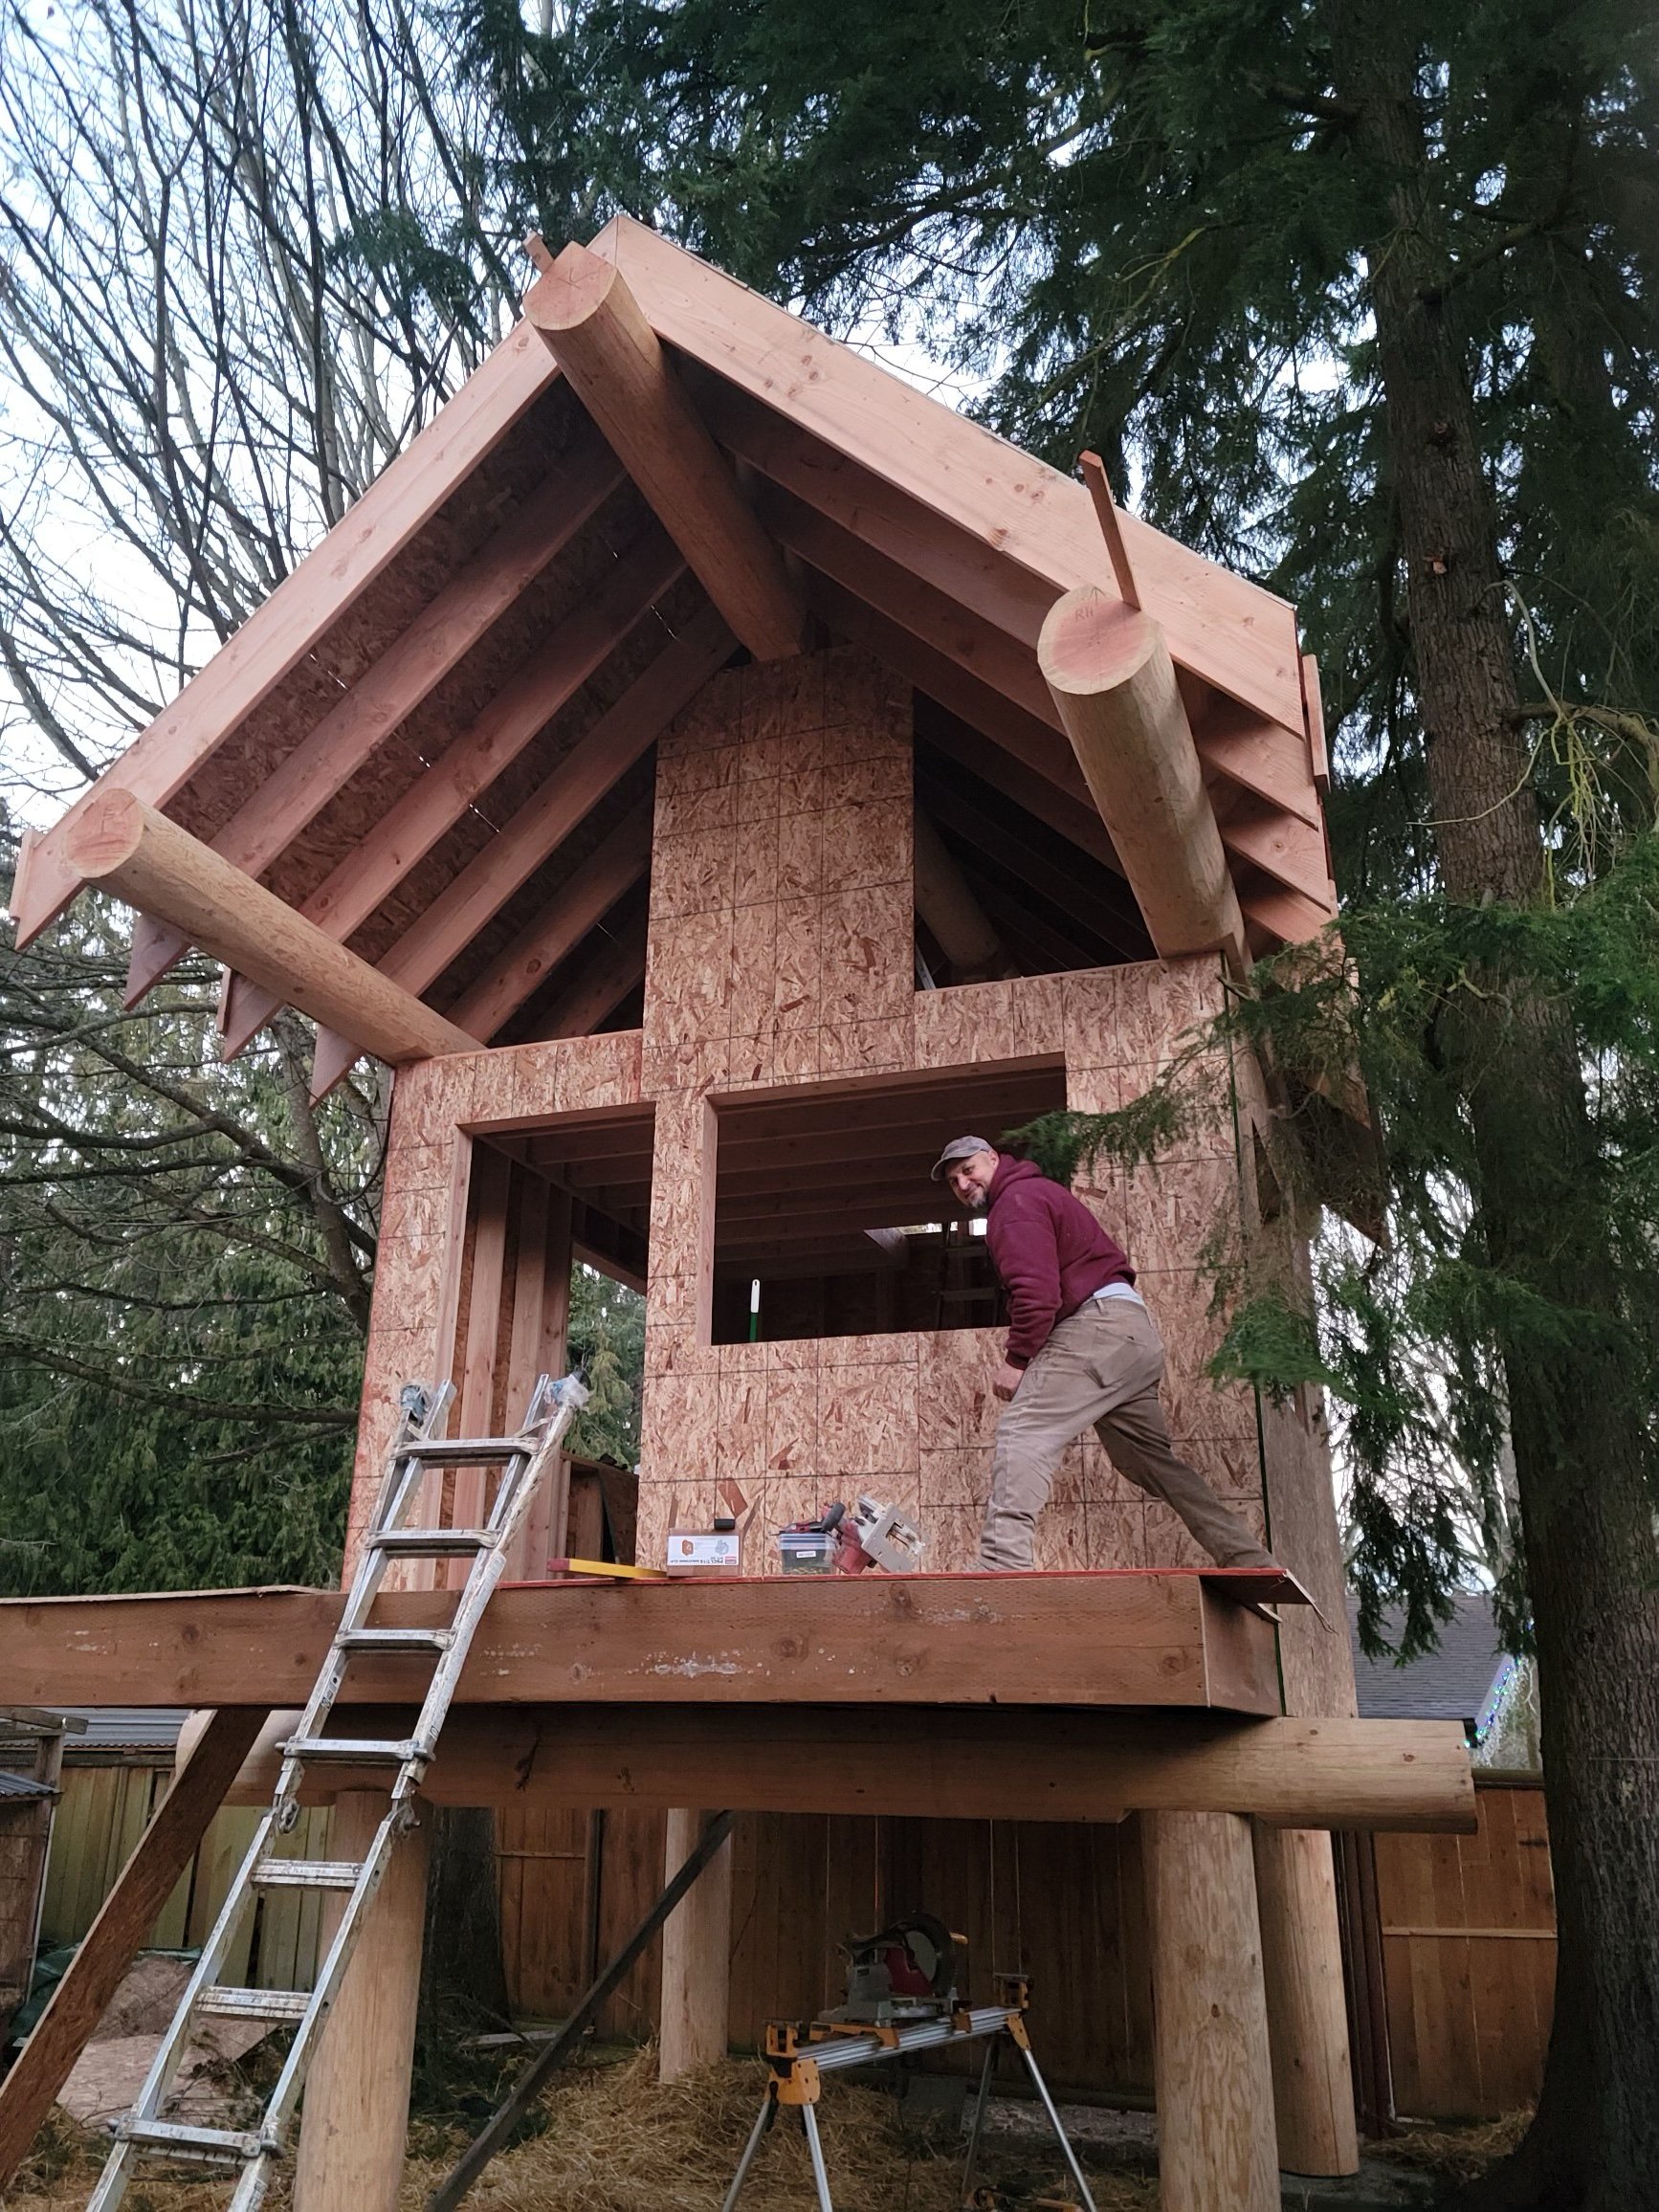  Elise working on kids playhouse/treehouse. 